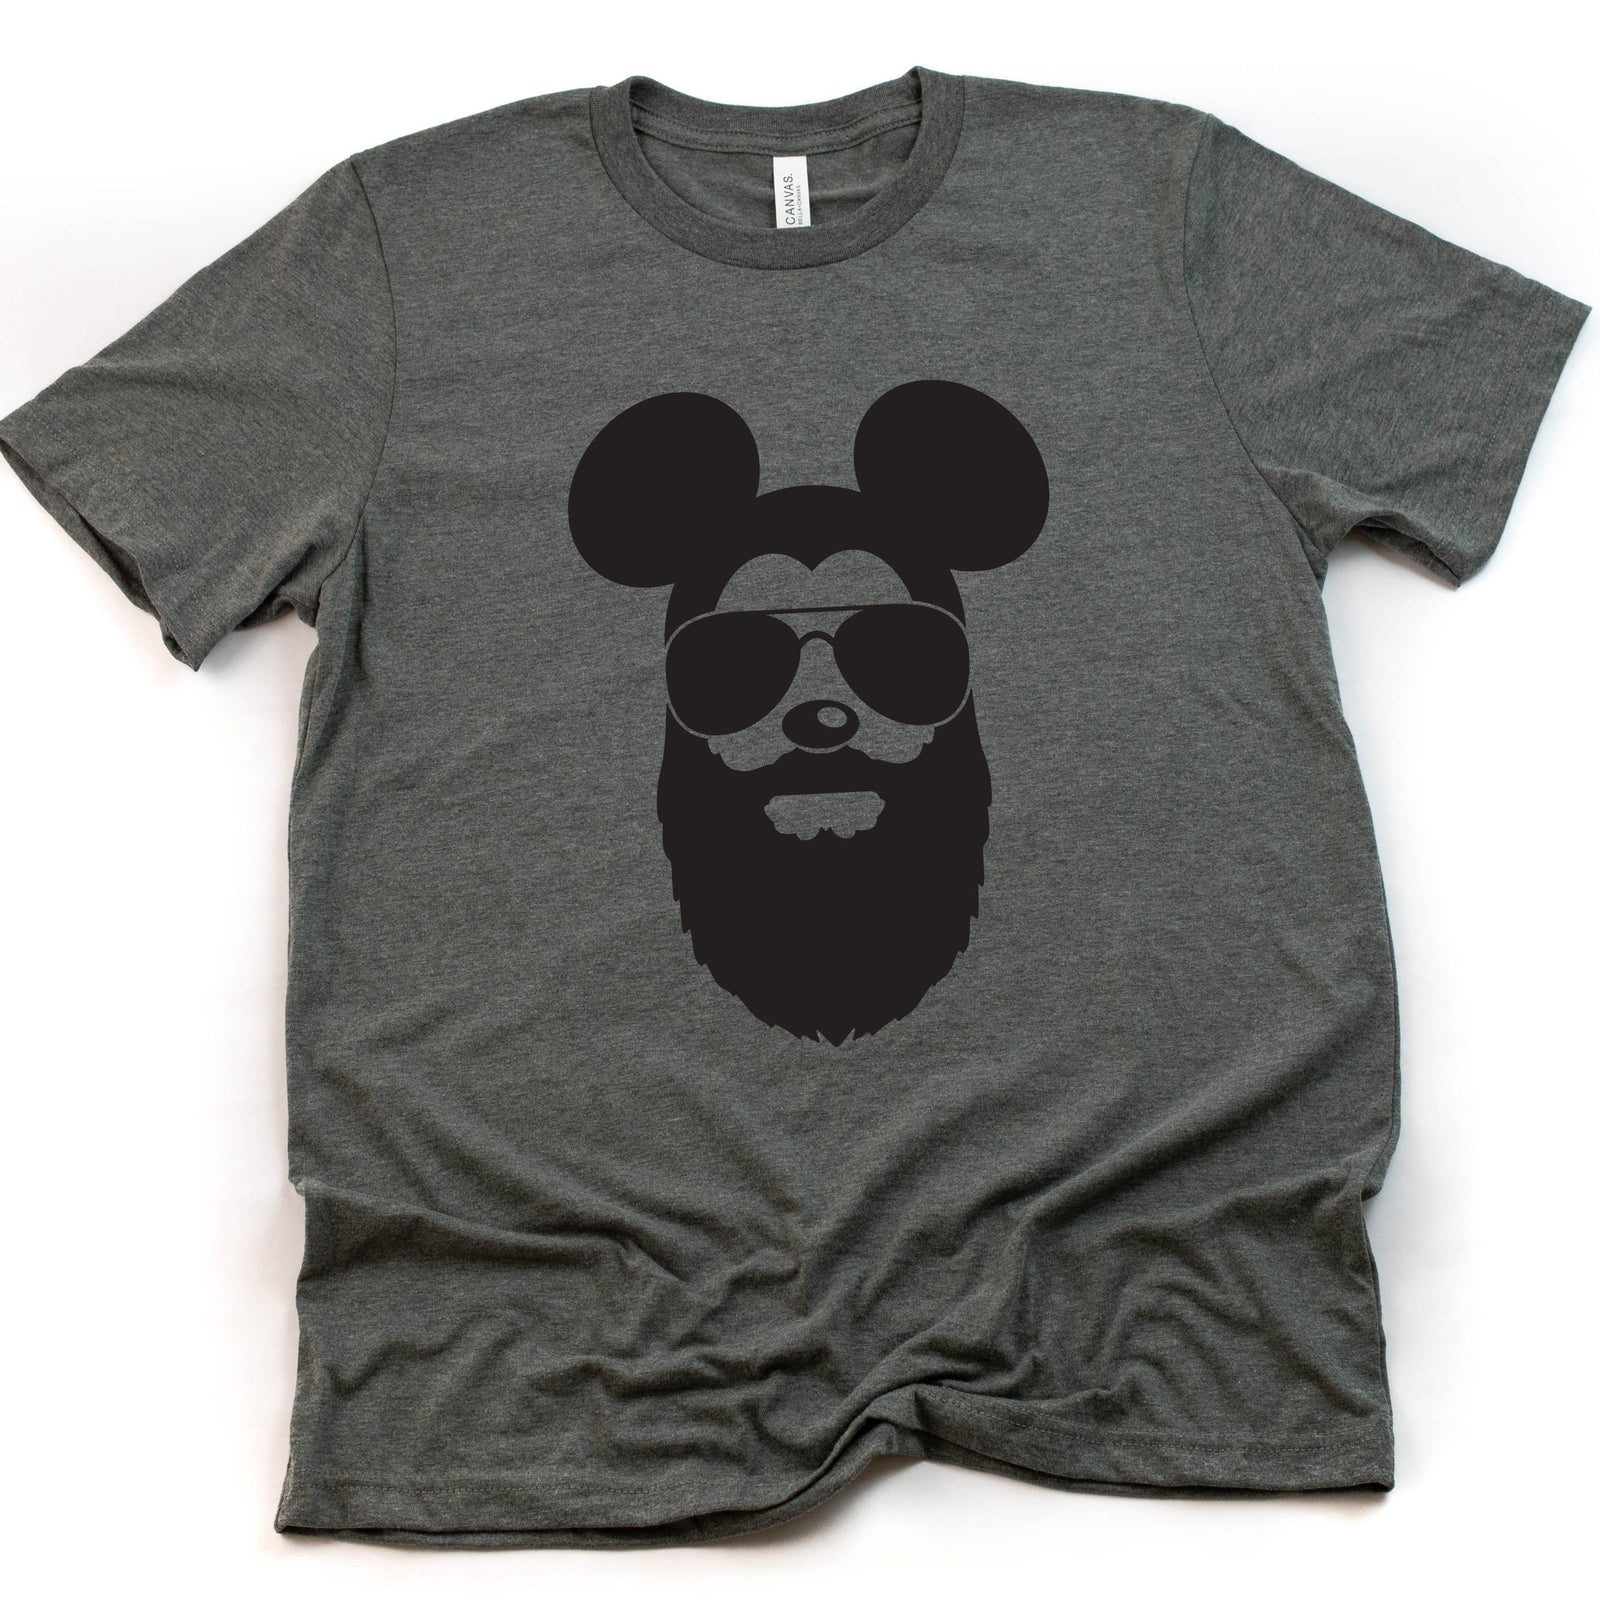 Bearded Mickey t shirt - Disney Trip Matching Shirts - Mickey Mouse T Shirt - Mickey Sunglasses